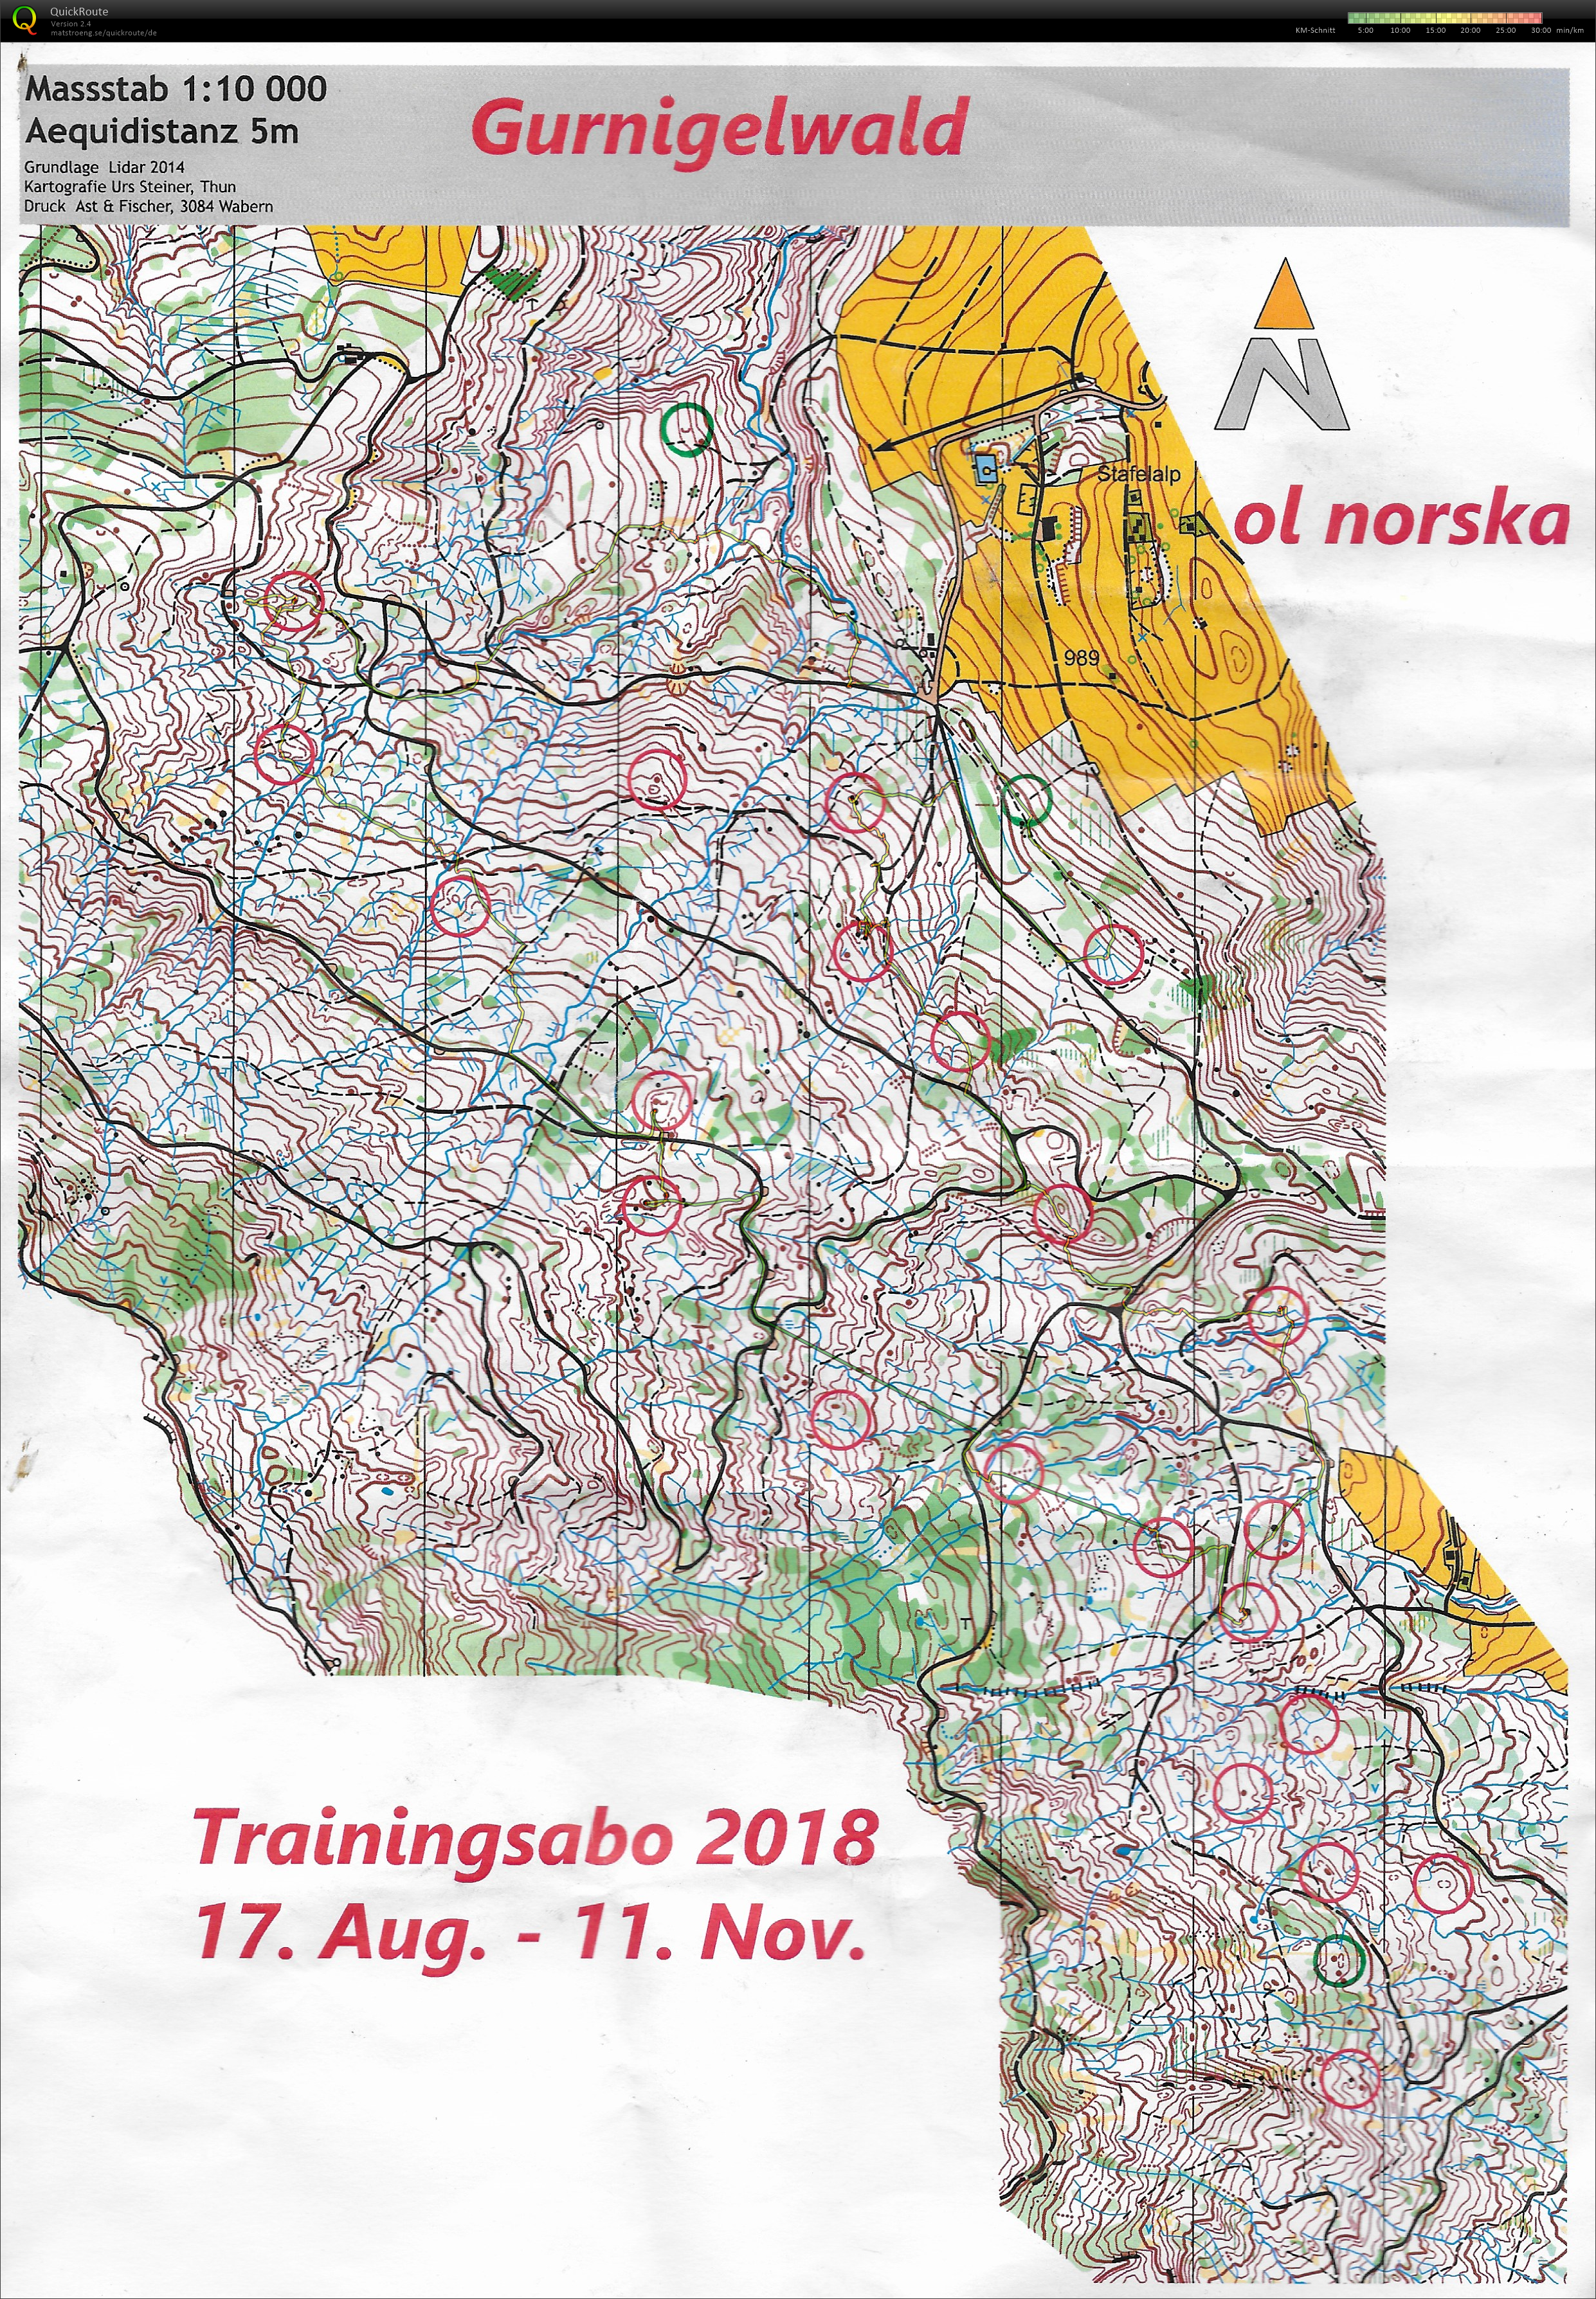 Trainingsabo Gurnigelwald (02/09/2018)